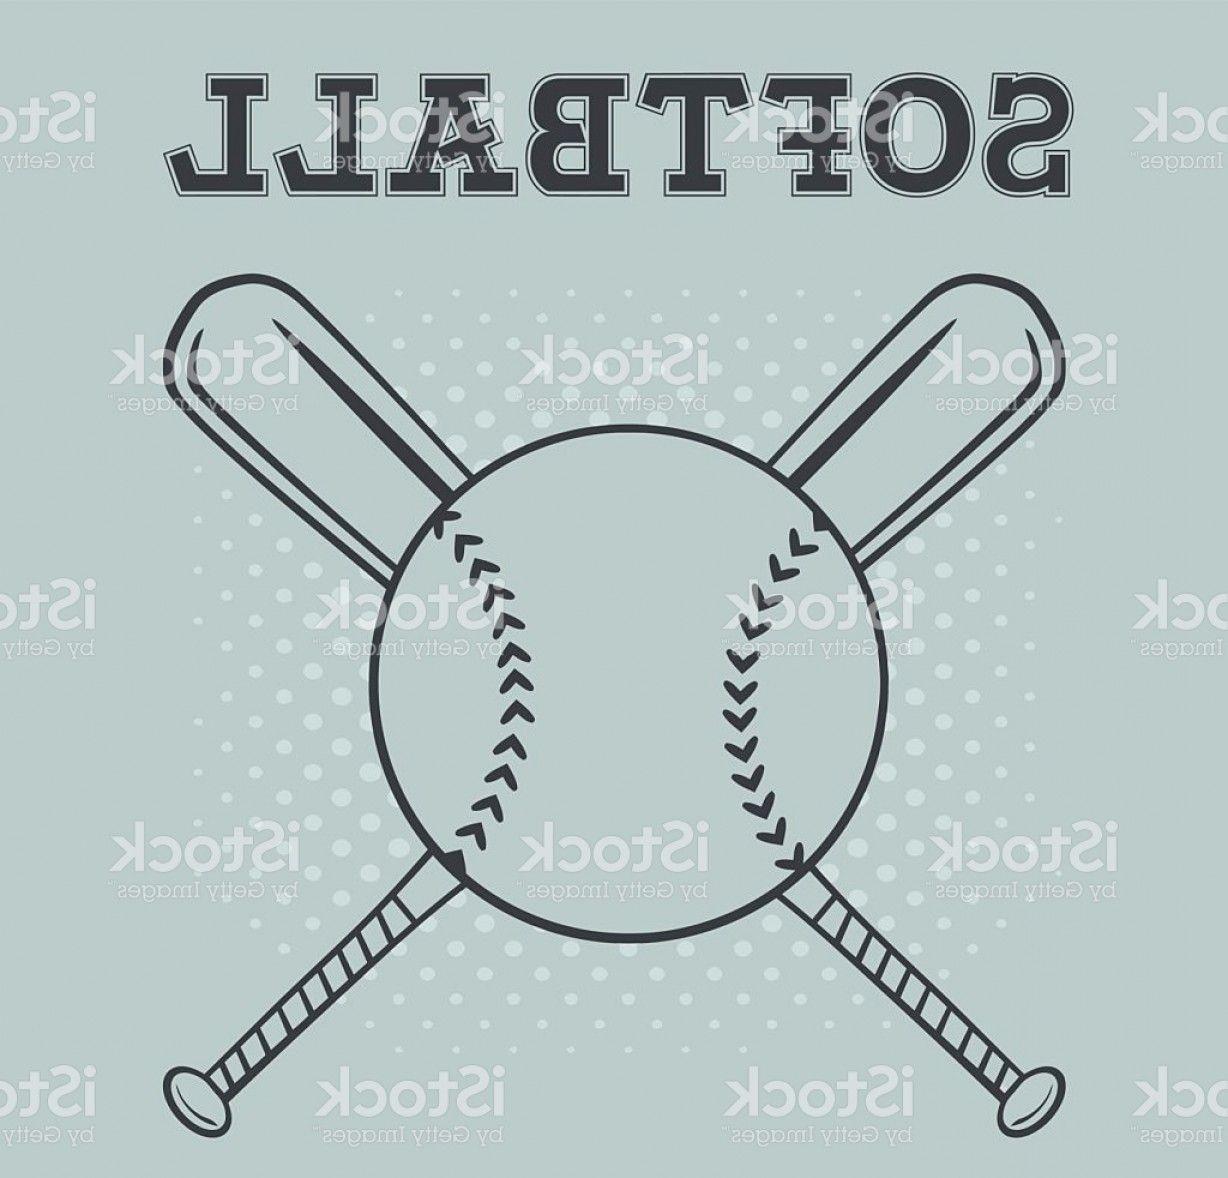 Crossed Bats Logo - Softball Over Crossed Bats Logo With Background Gm | LaztTweet